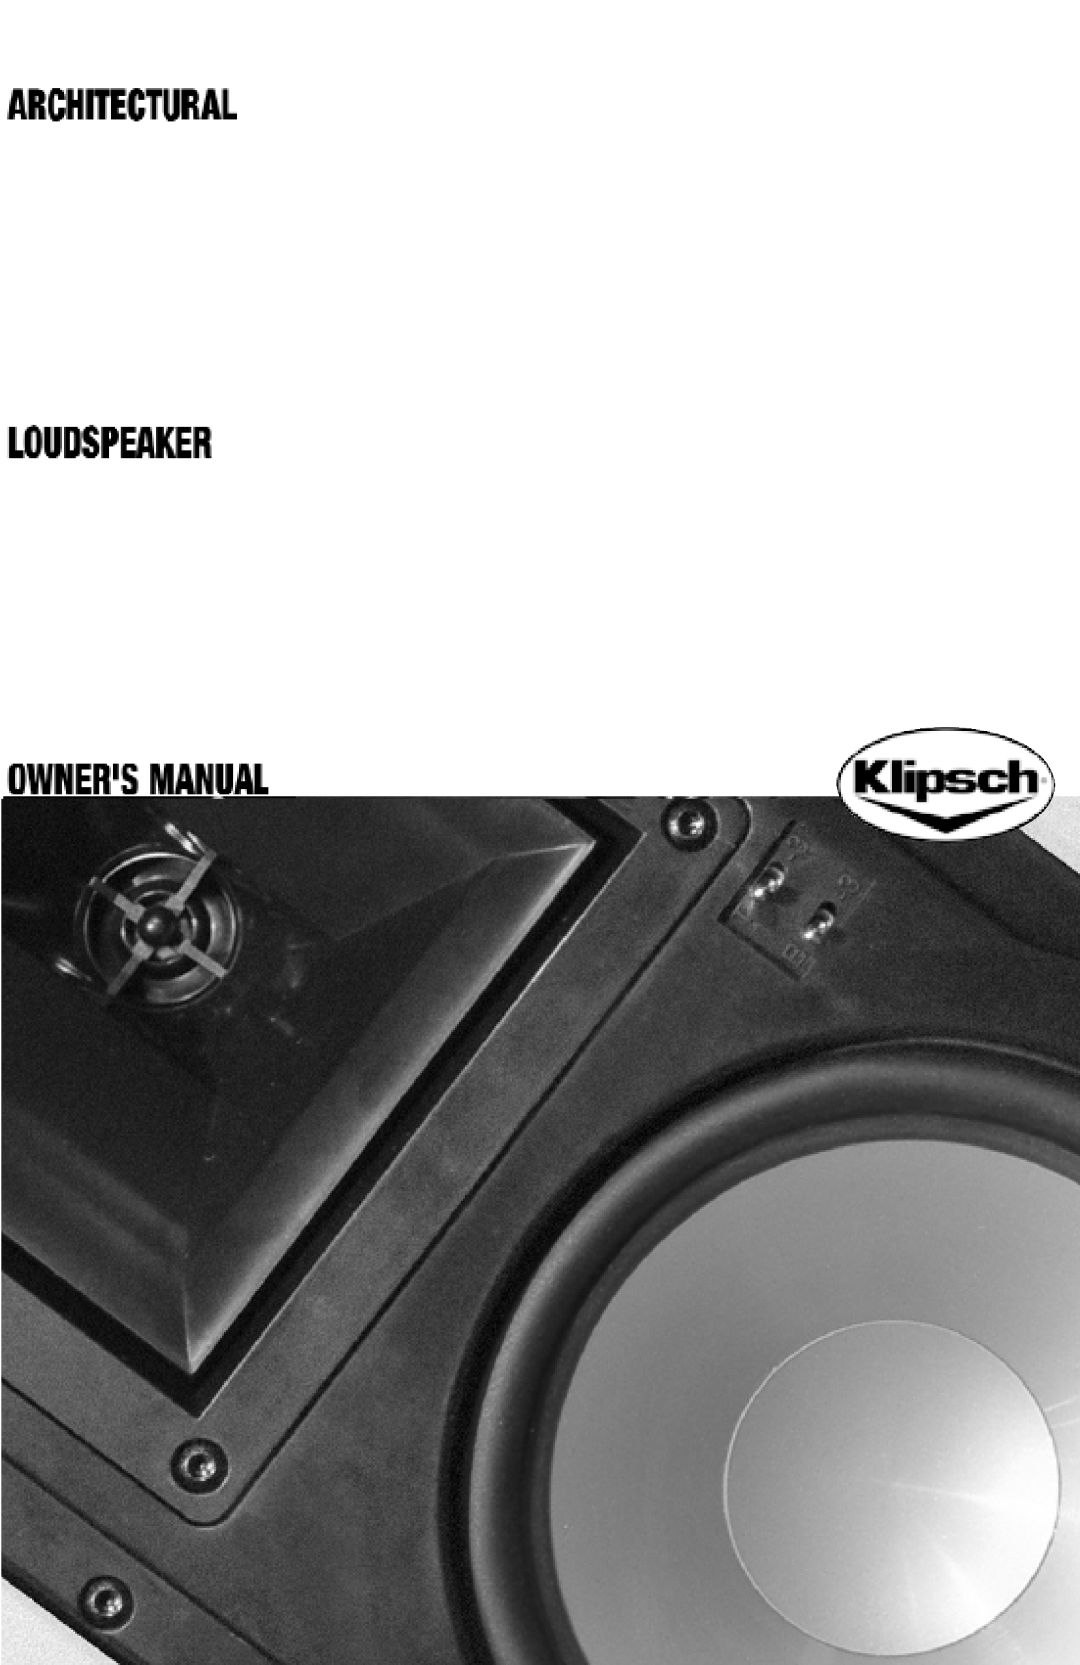 Klipsch ARCHITECTURAL SPEAKERS manual 